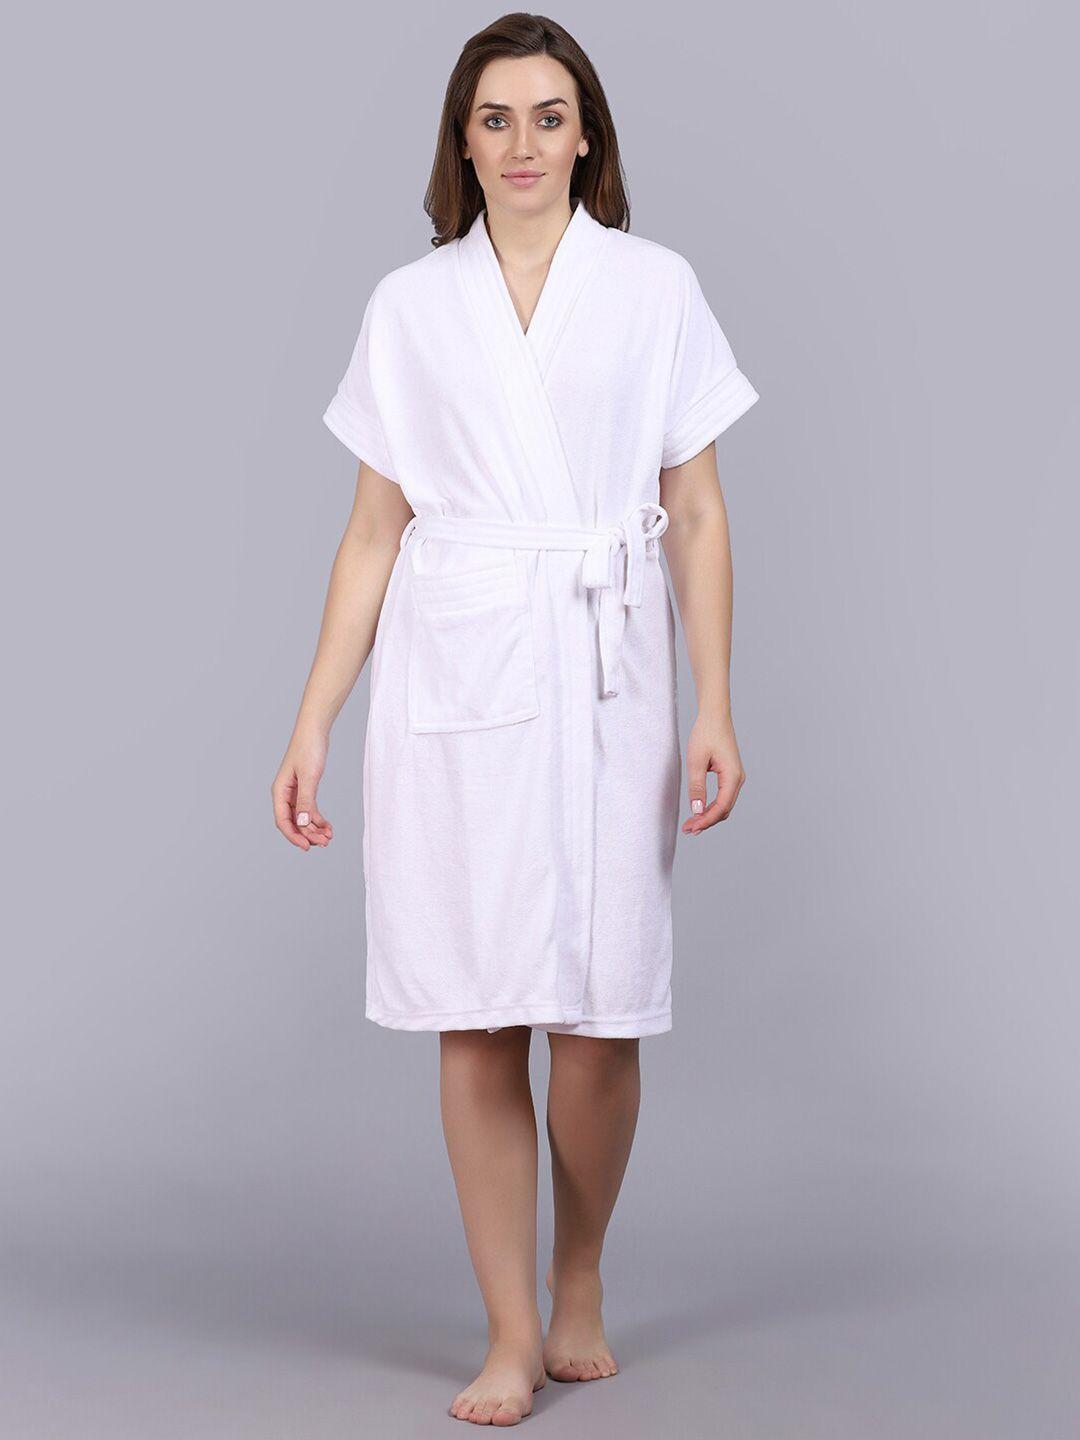 poorak white short sleeves bath robe